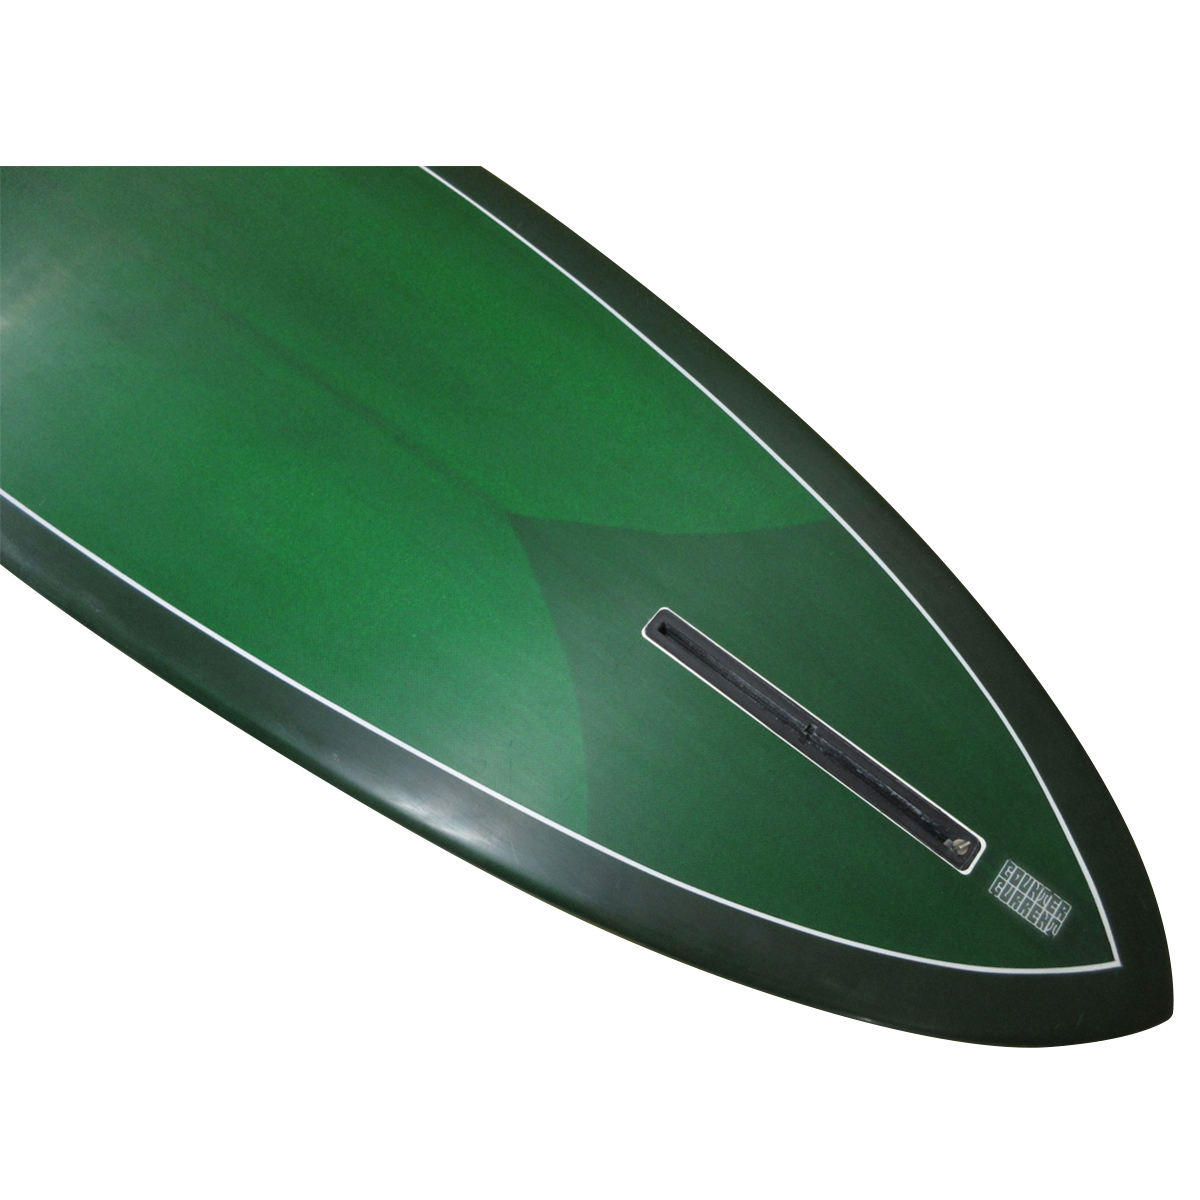 SAKAE SURFBOARDS / Single 7`0